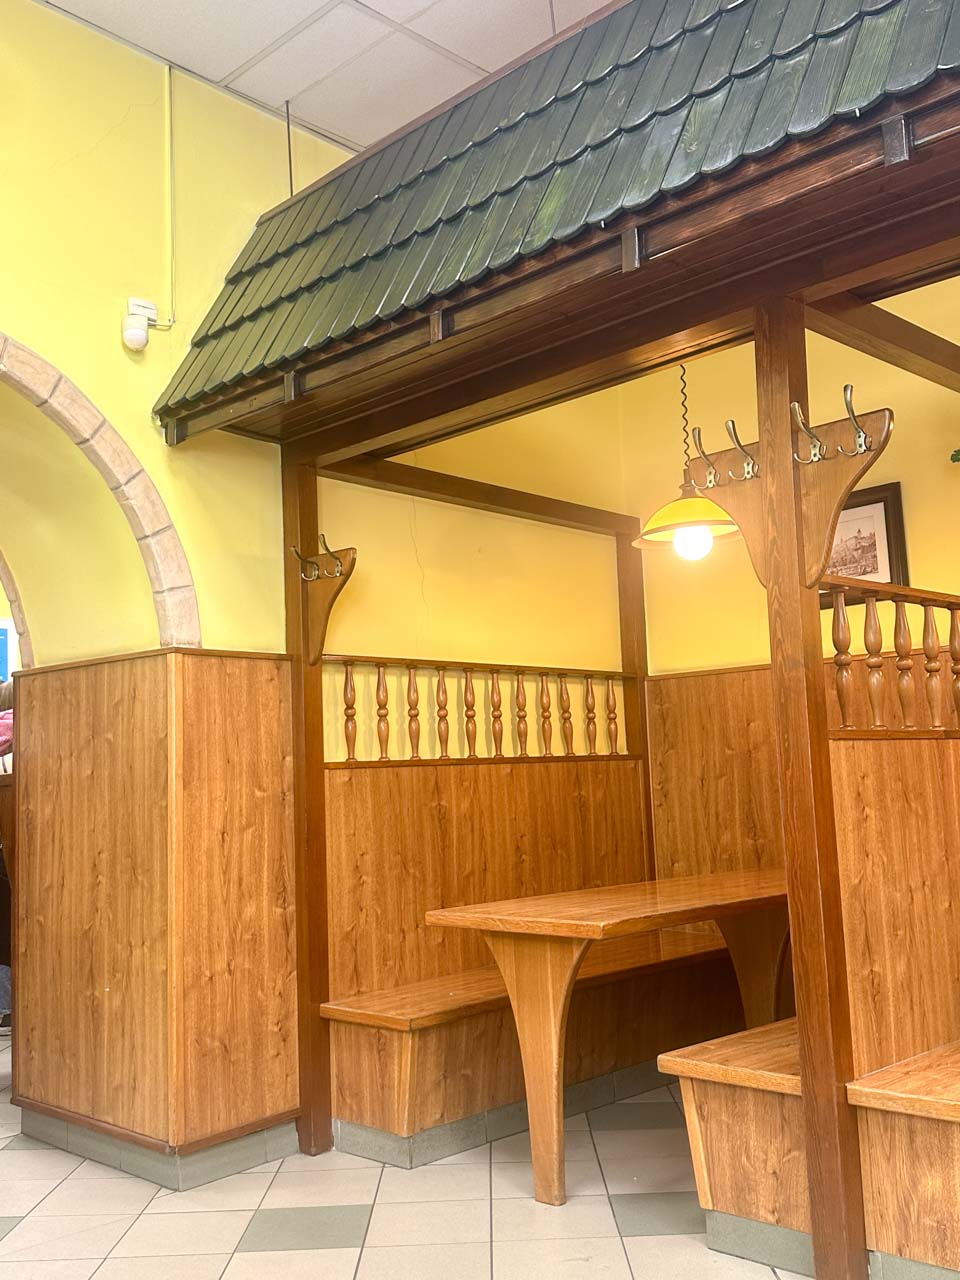 Wooden booths inside the Havelská Koruna restaurant in Prague